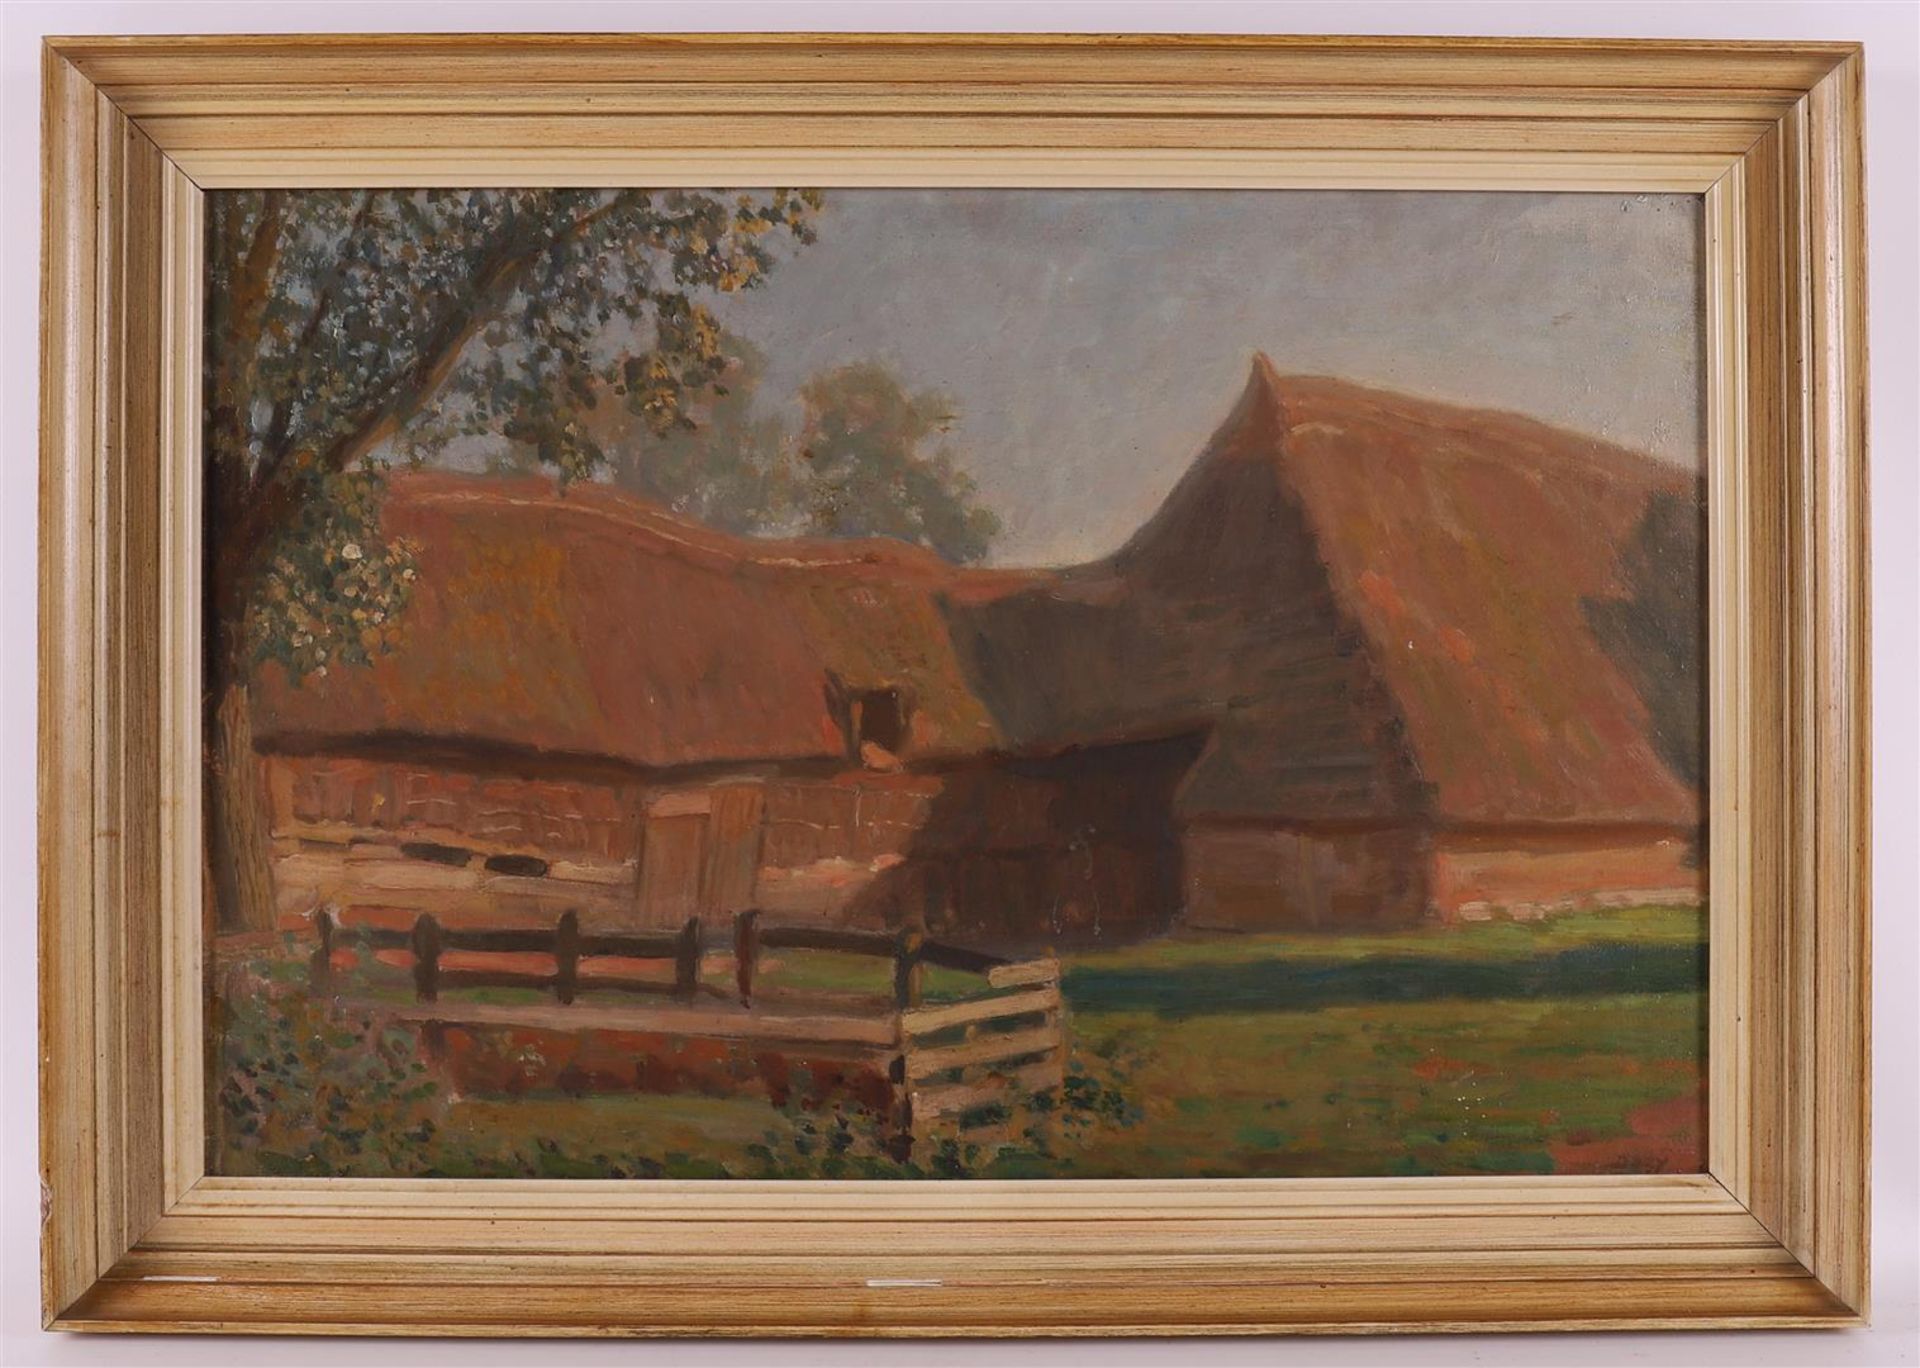 Dozy, Reinhart (Nijmegen, 1880-1947) 'Secret house of a farm',